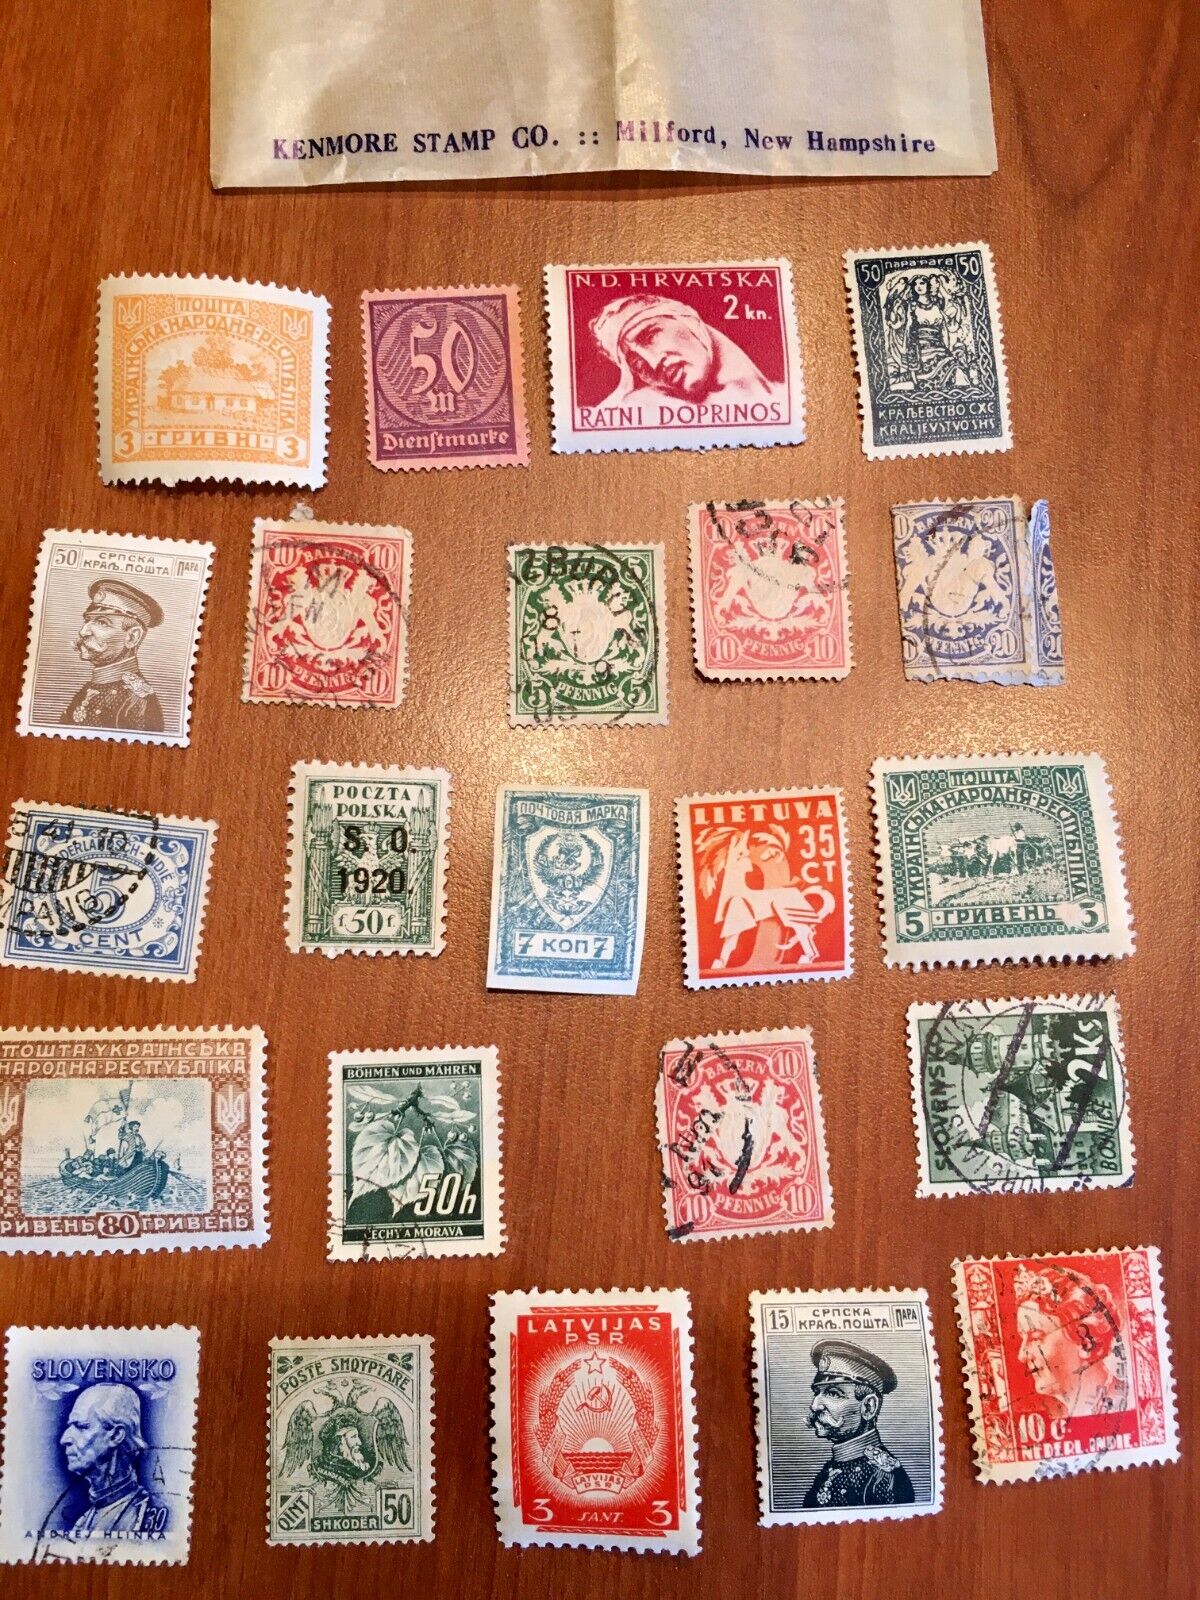 24 Stamps 19/20th Century Lost Nations - Kenmore Stamp; Latvia, Poland, Albania? Без бренда - фотография #2